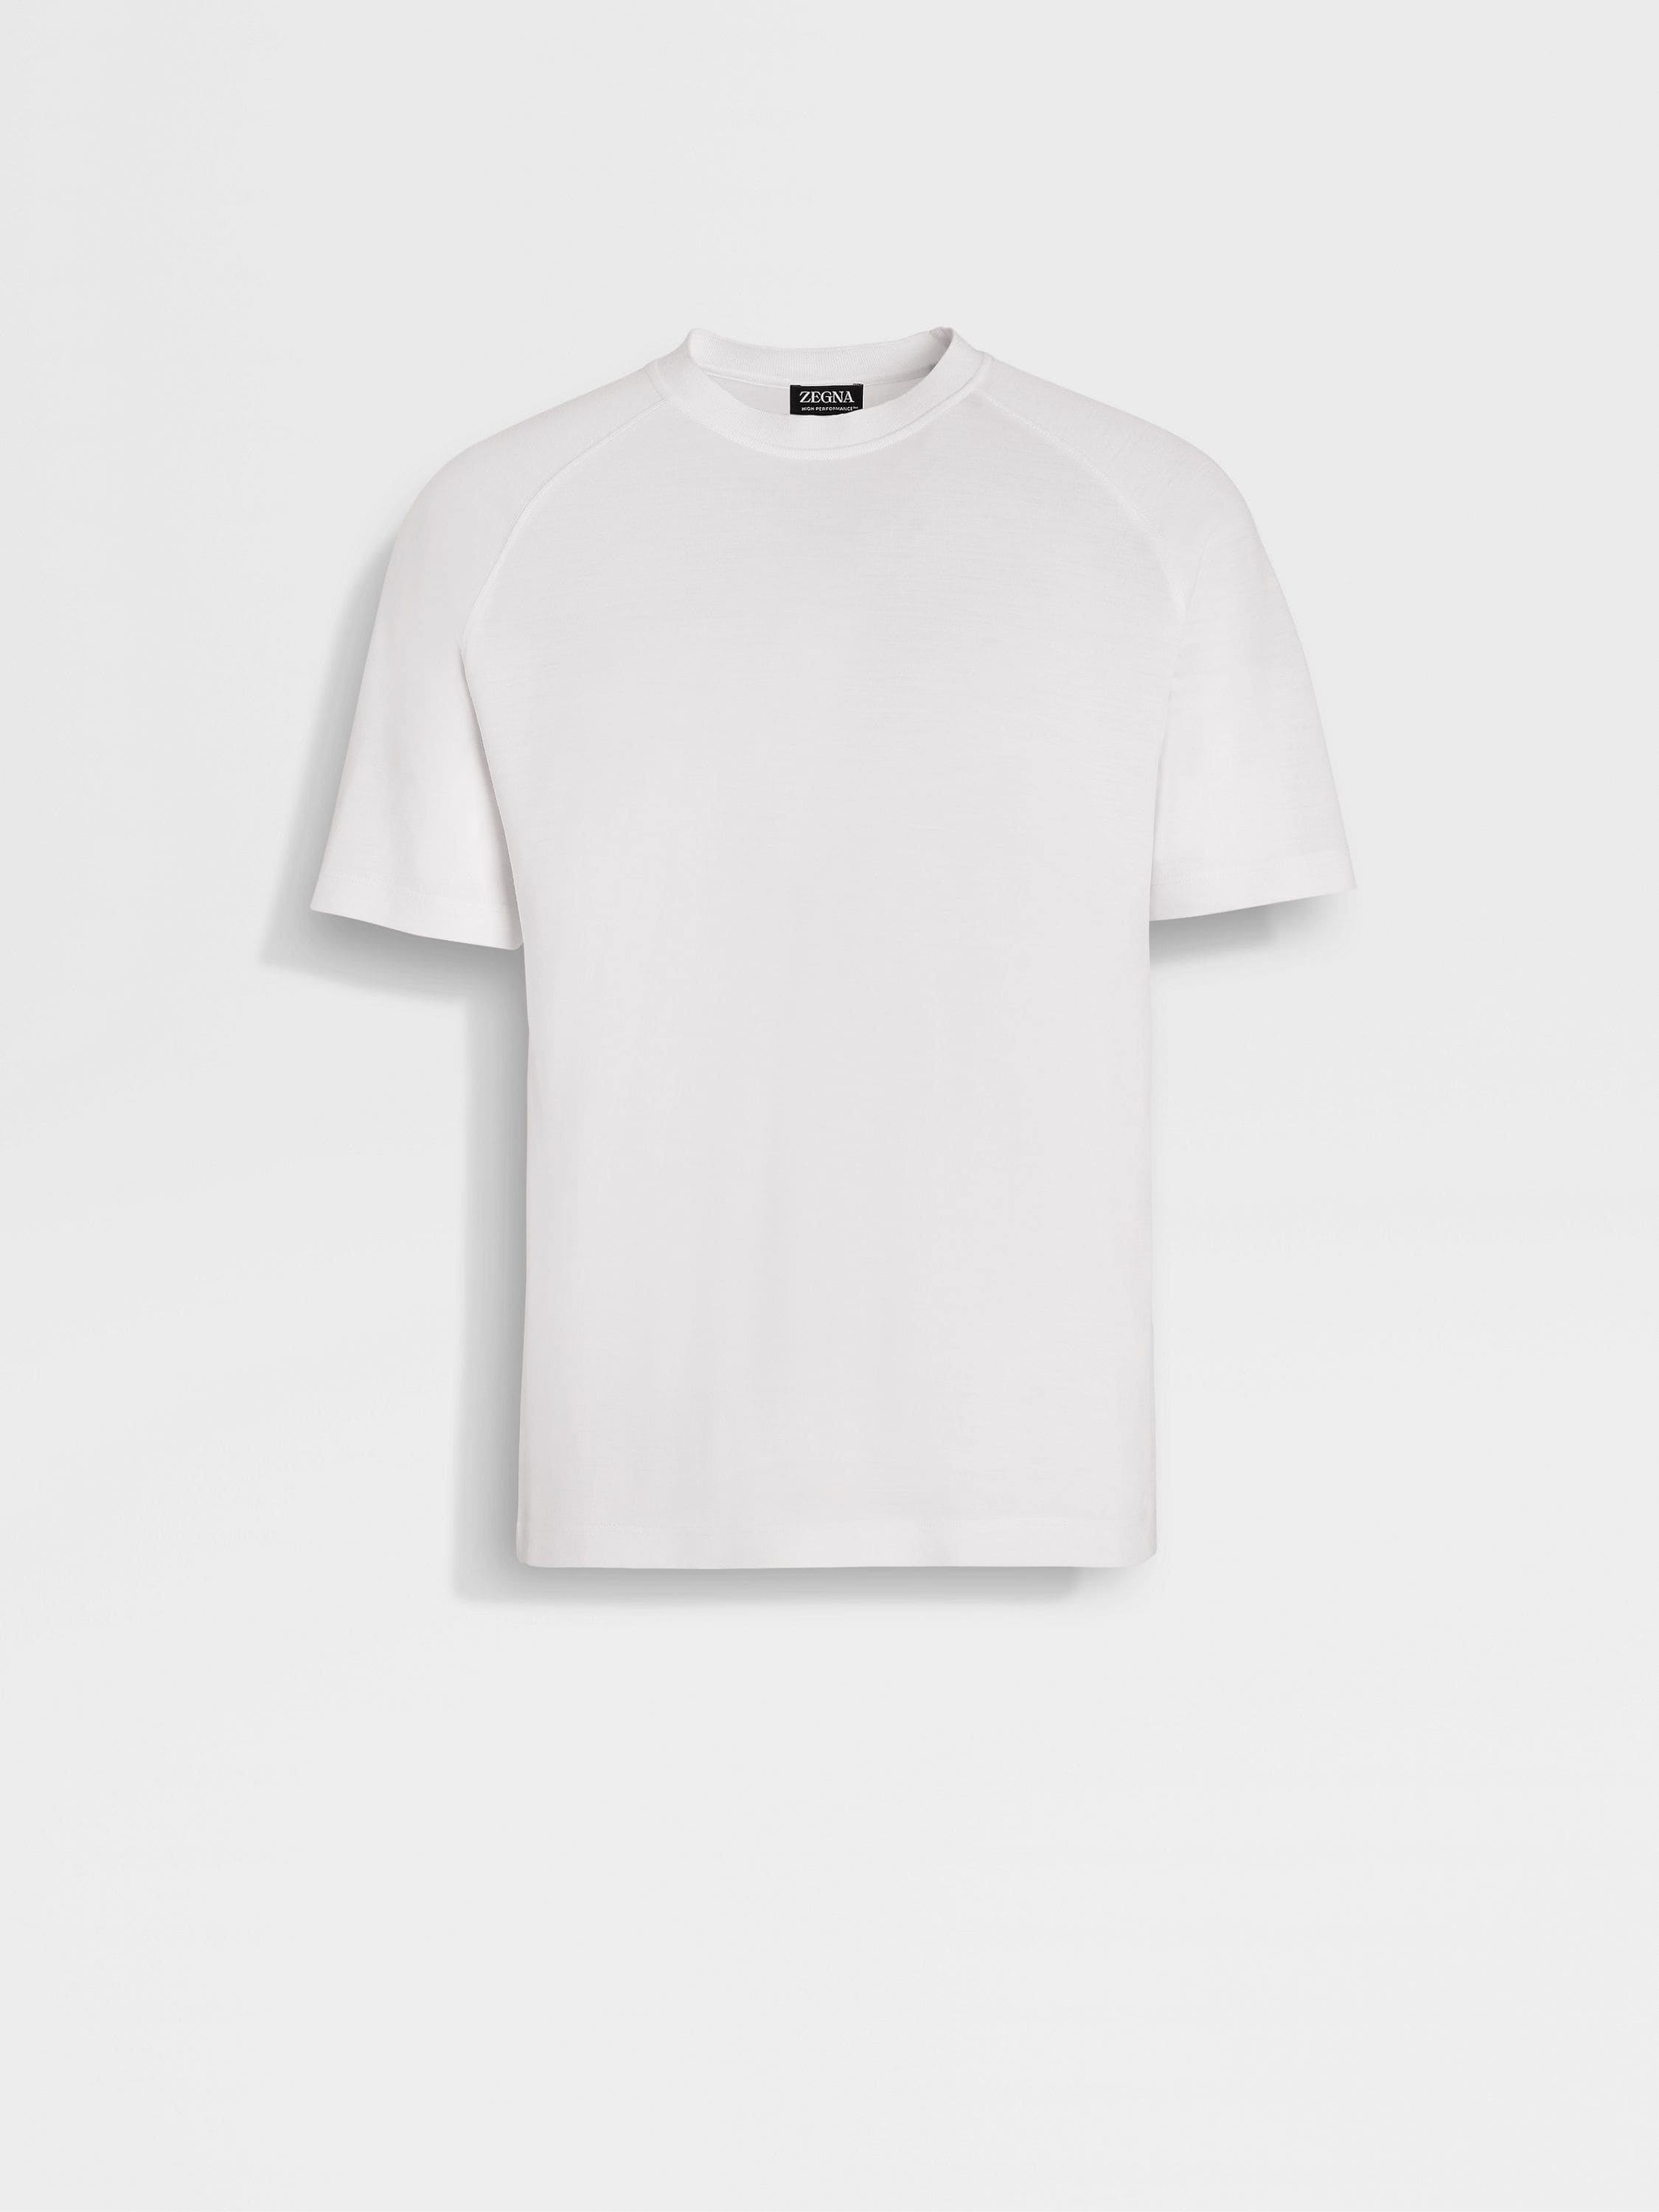 FW23 White Zegna High Wool | Performance™ T-shirt US 25729753